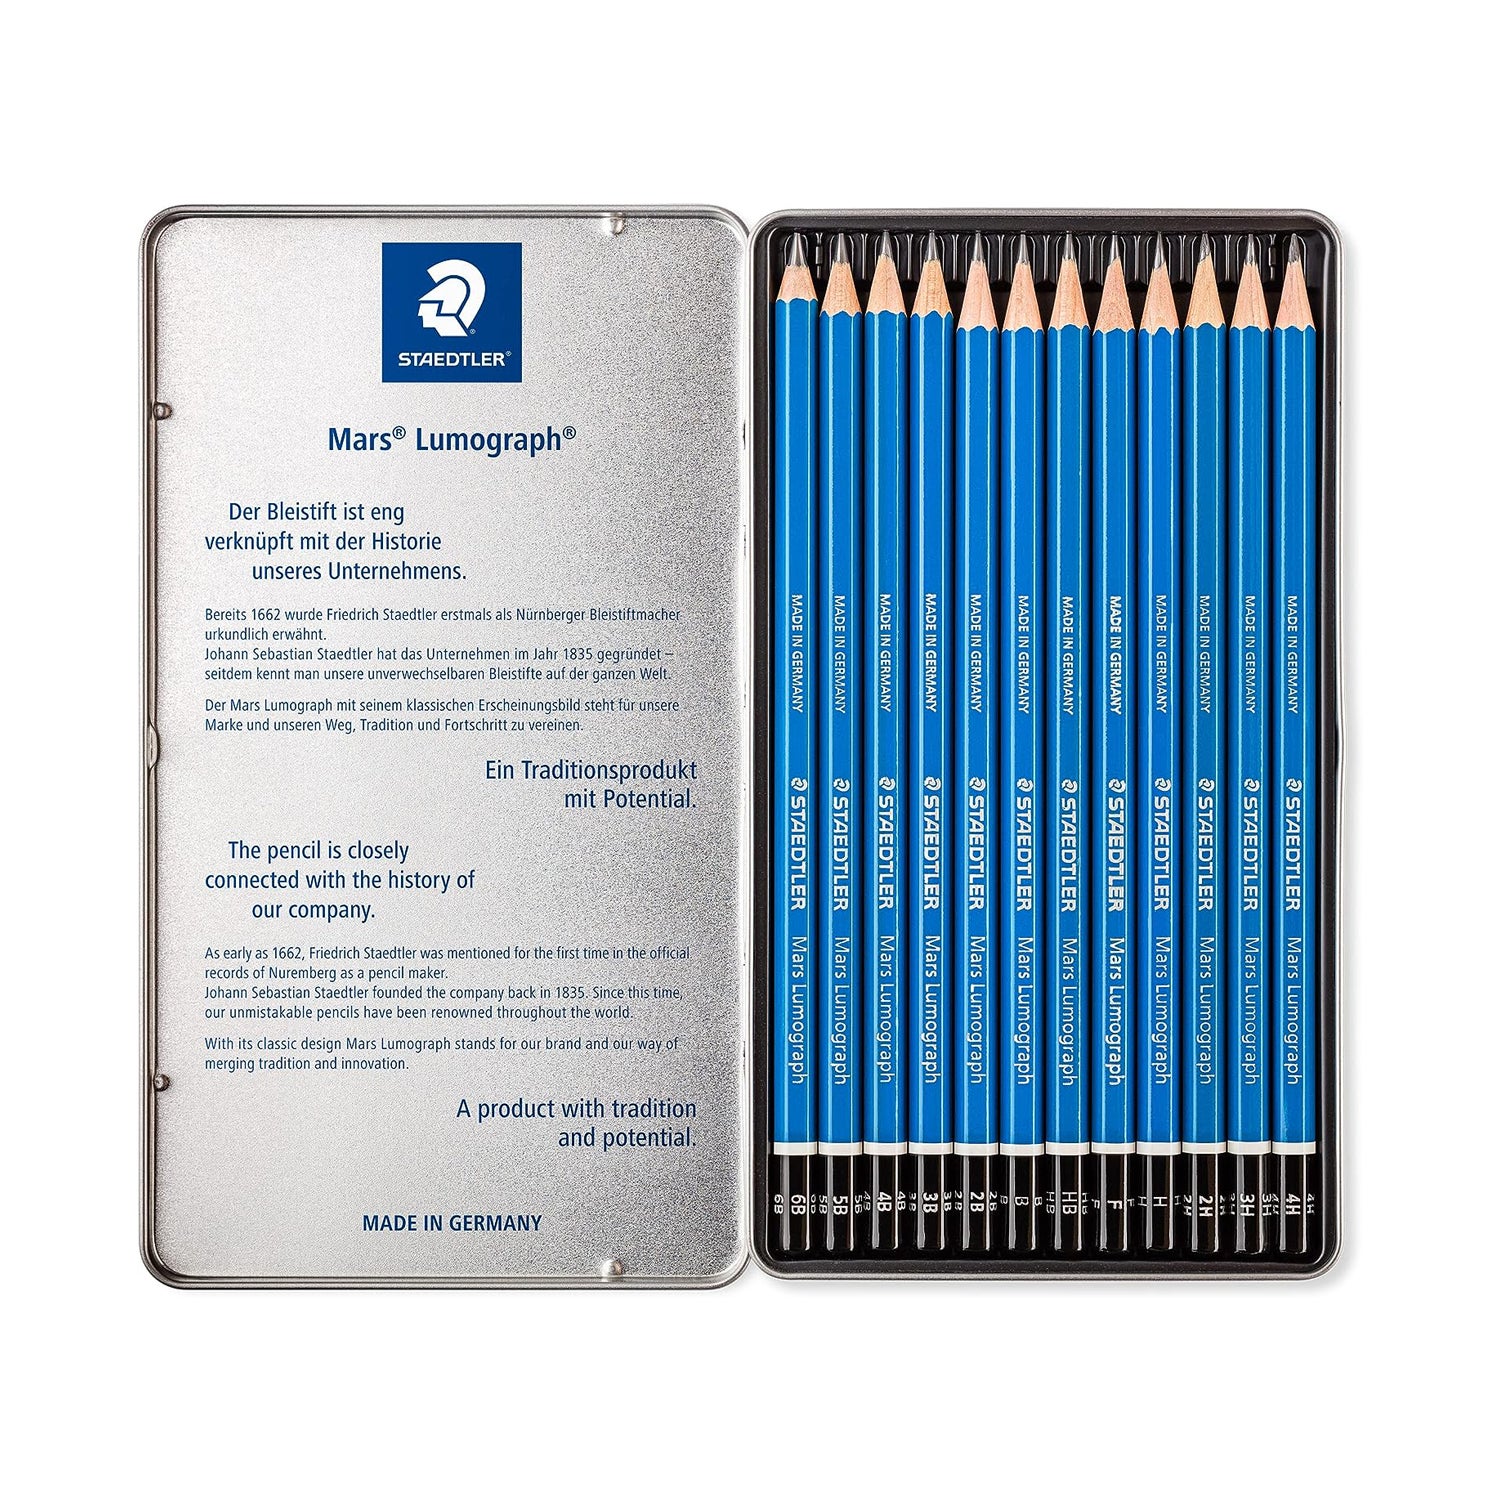 Bazic Design & Drafting Pencil Set (12 Assortment)